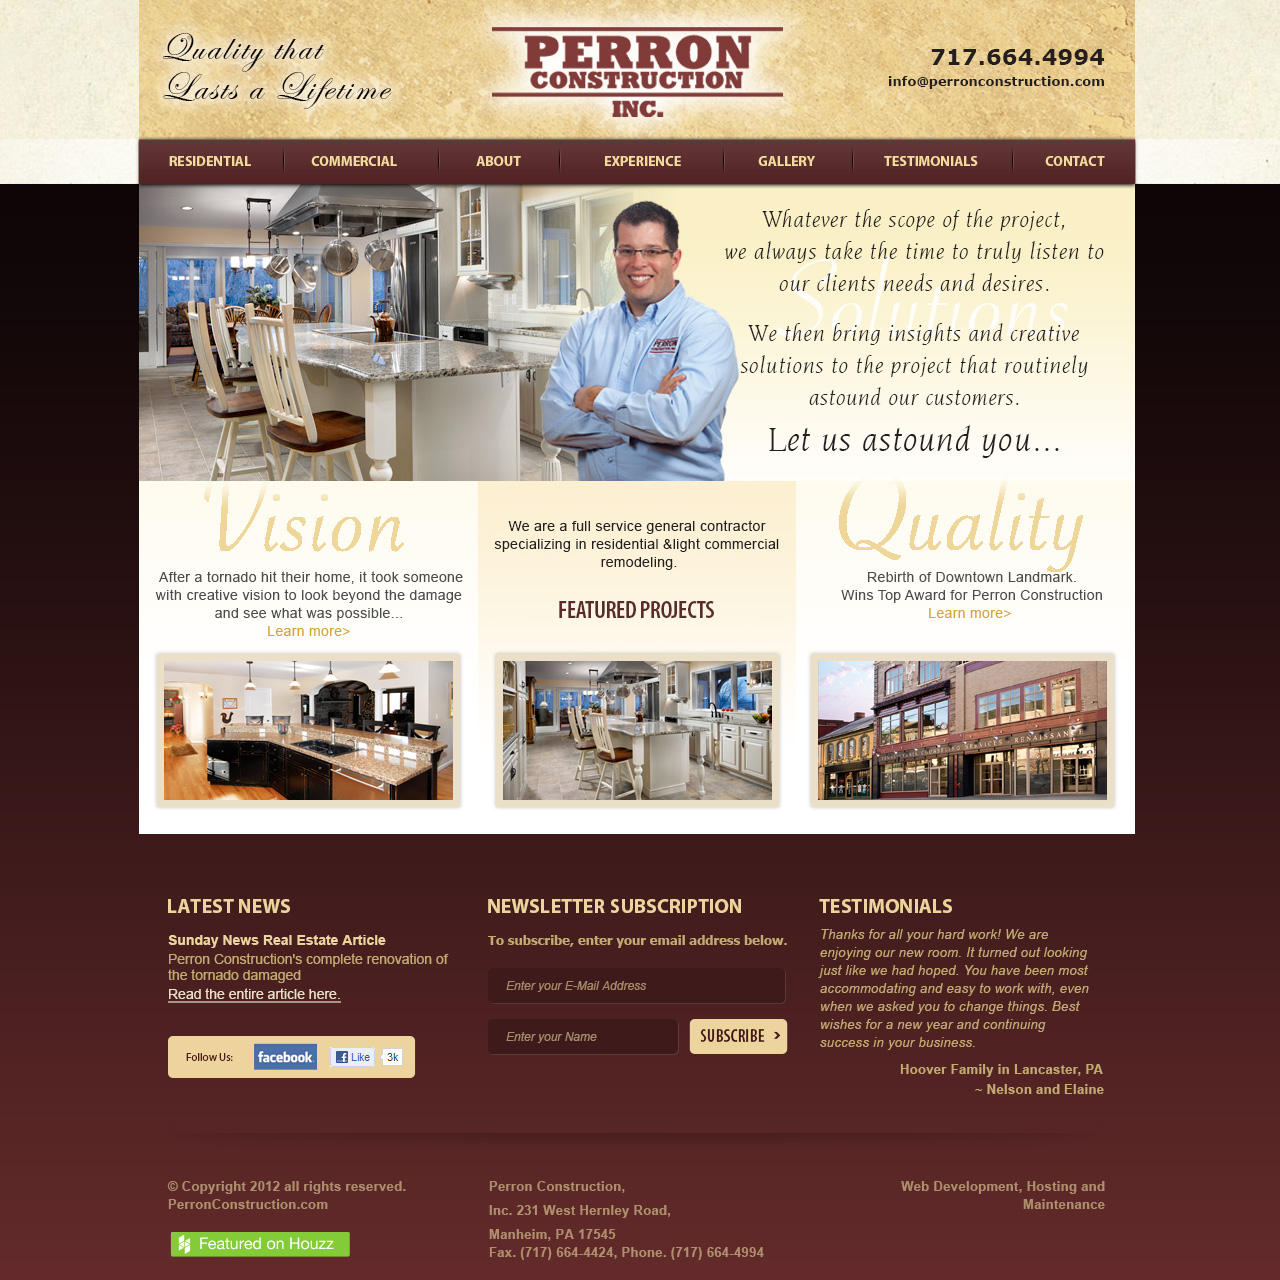 Perron Construction Inc - General construction company website design